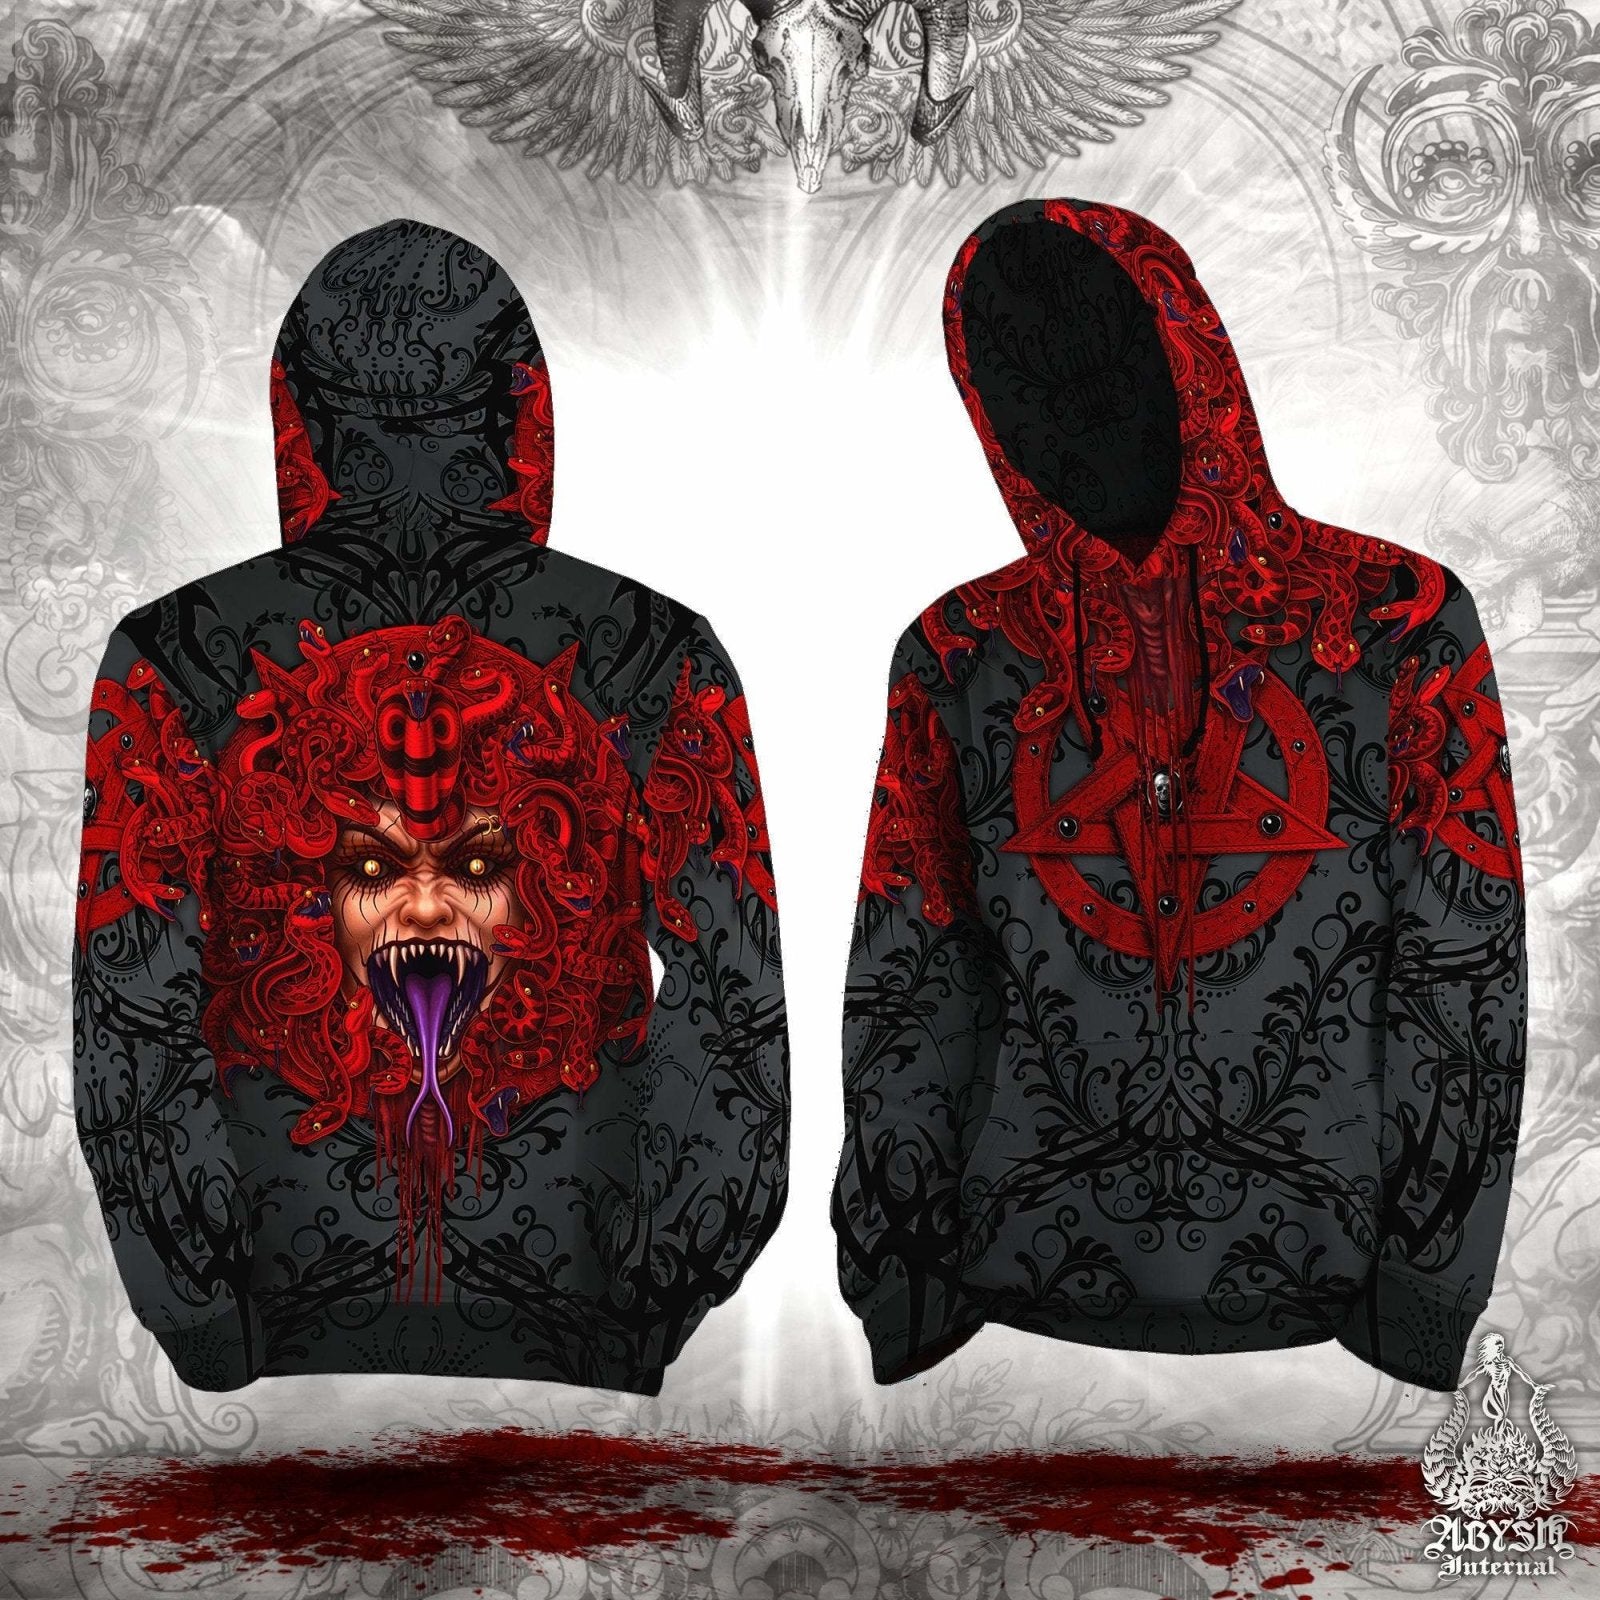 Black Metal Hoodie, Satanic Streetwear, Gothic Outfit, Alternative Clothing, Unisex - Demon Medusa, Red Pentagram - Abysm Internal